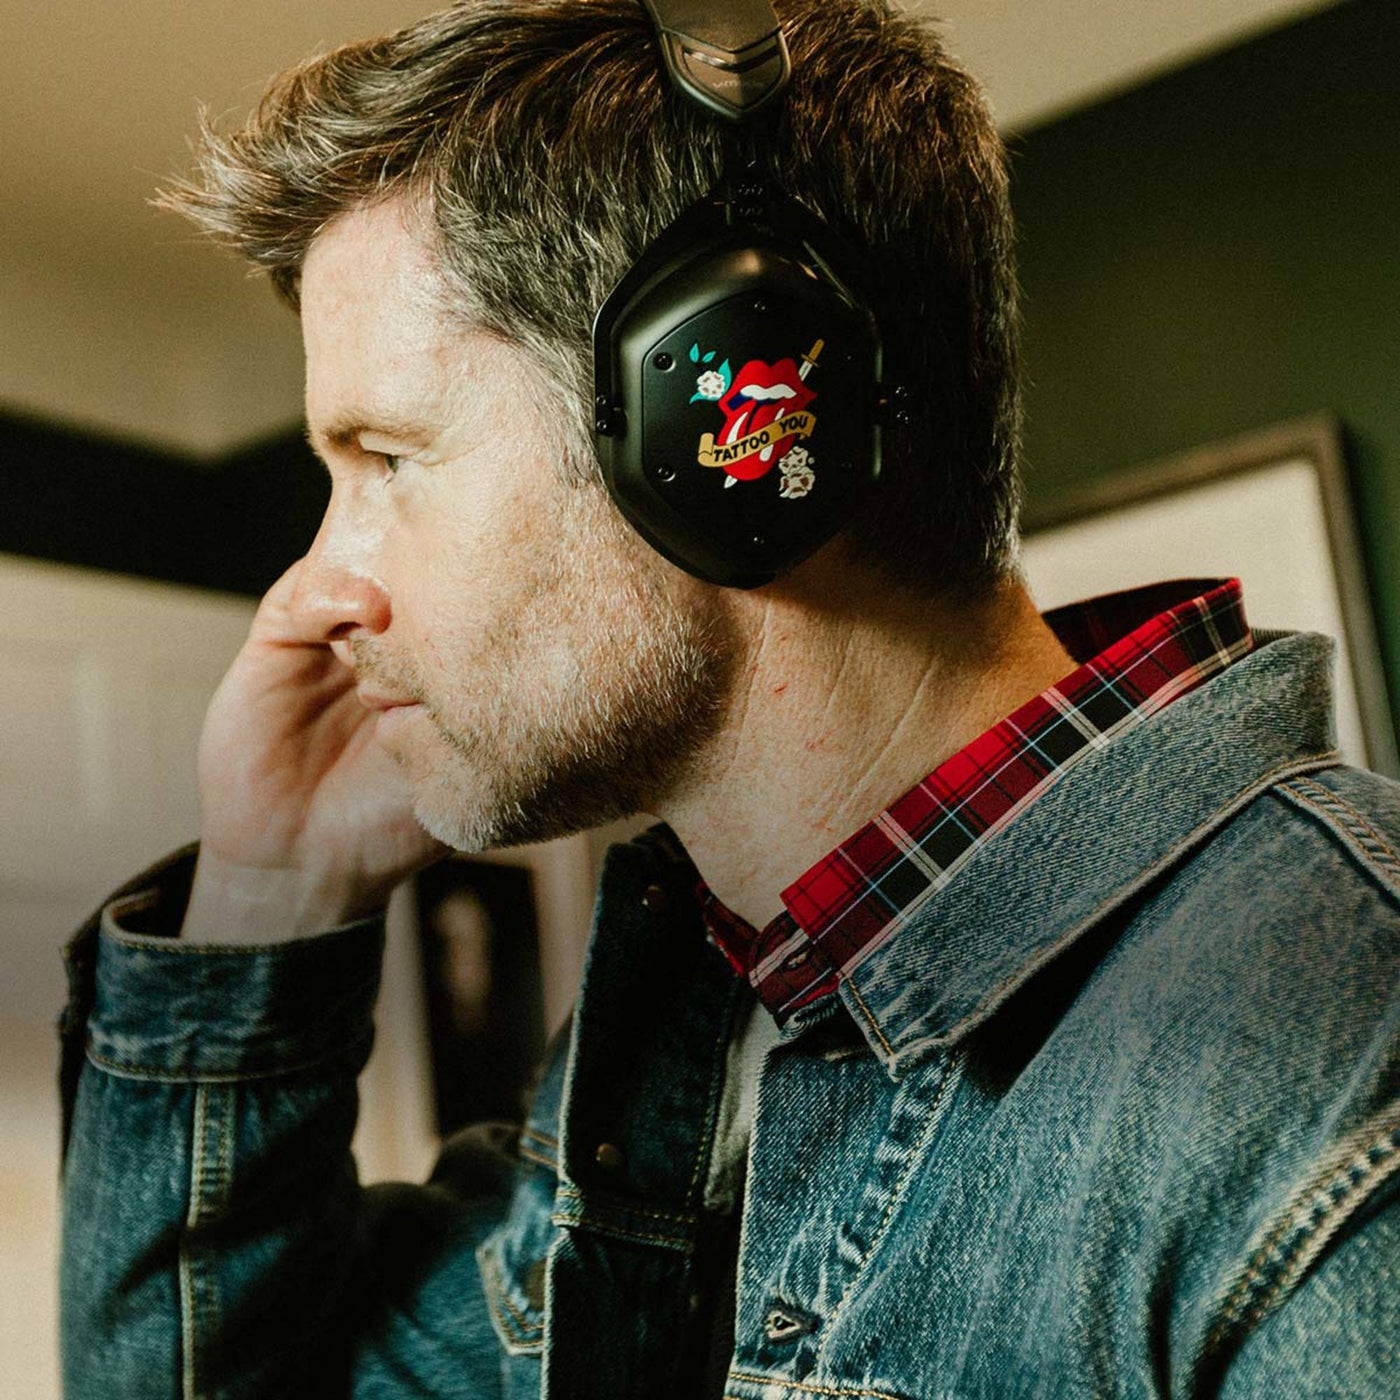 V-Moda x Rolling Stones Crossfade 2 Wireless Bluetooth Over-Ear Headphones - Tattoo You